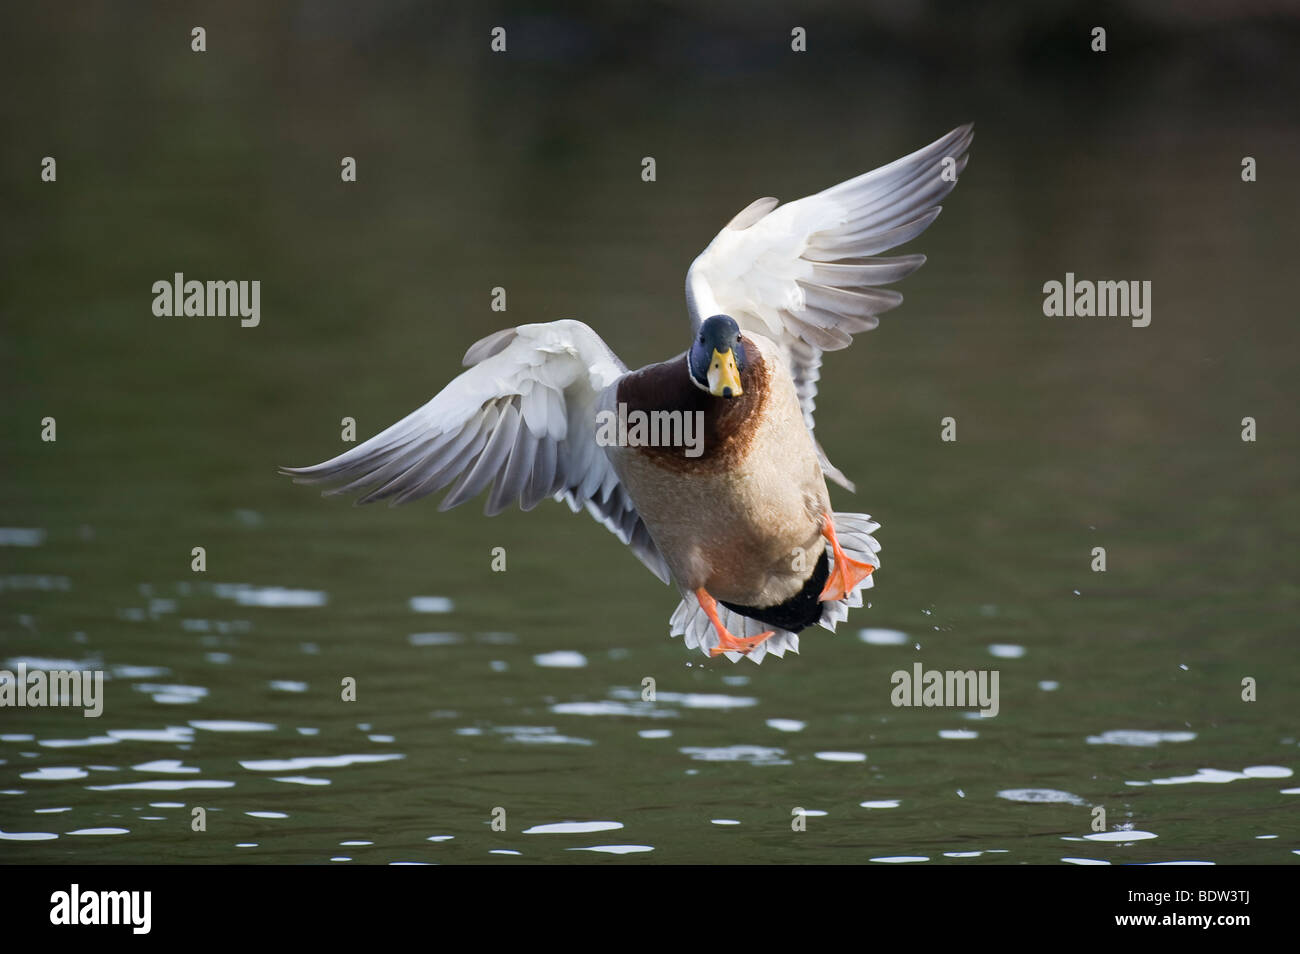 A duck in landing approach Stock Photo